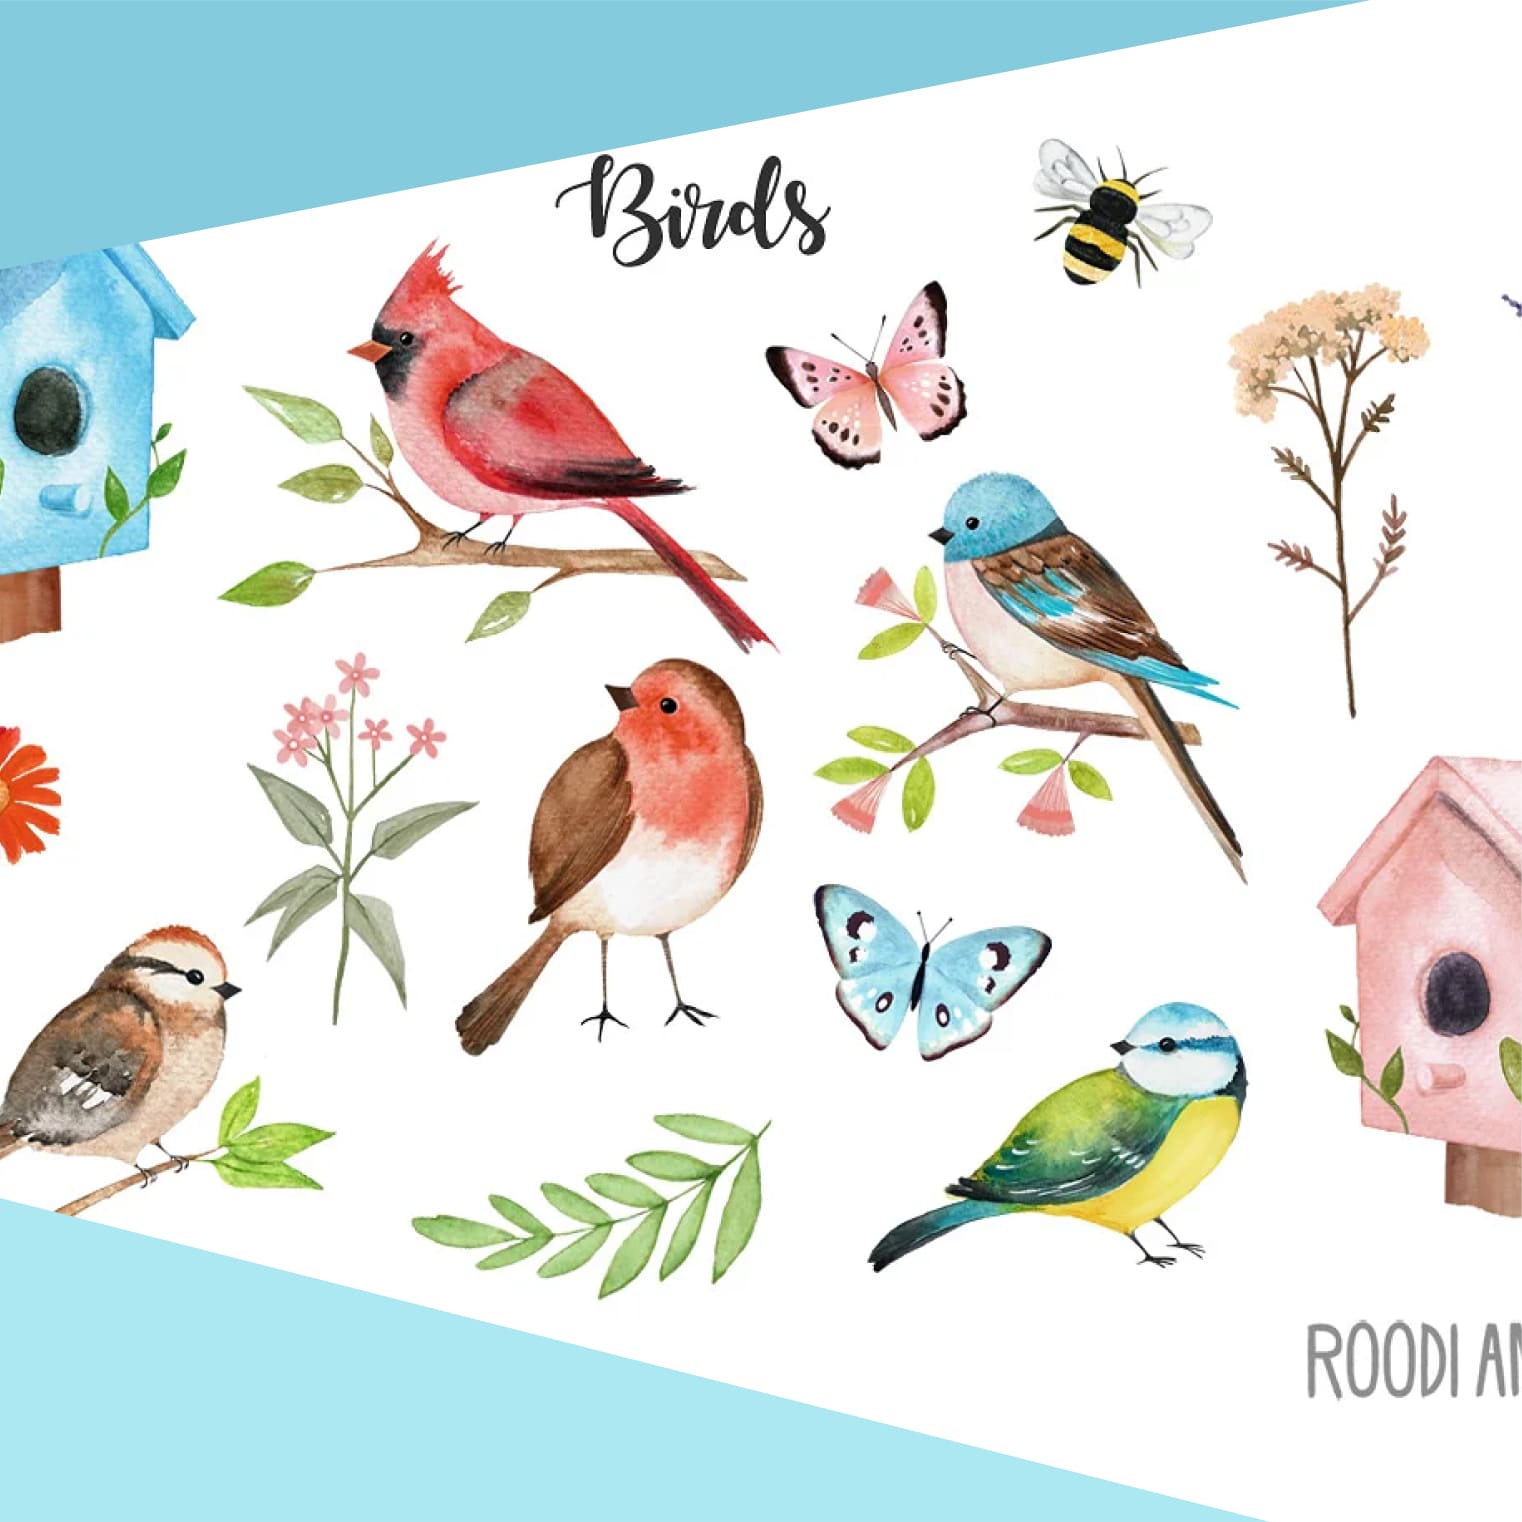 Watercolor Birds cover.